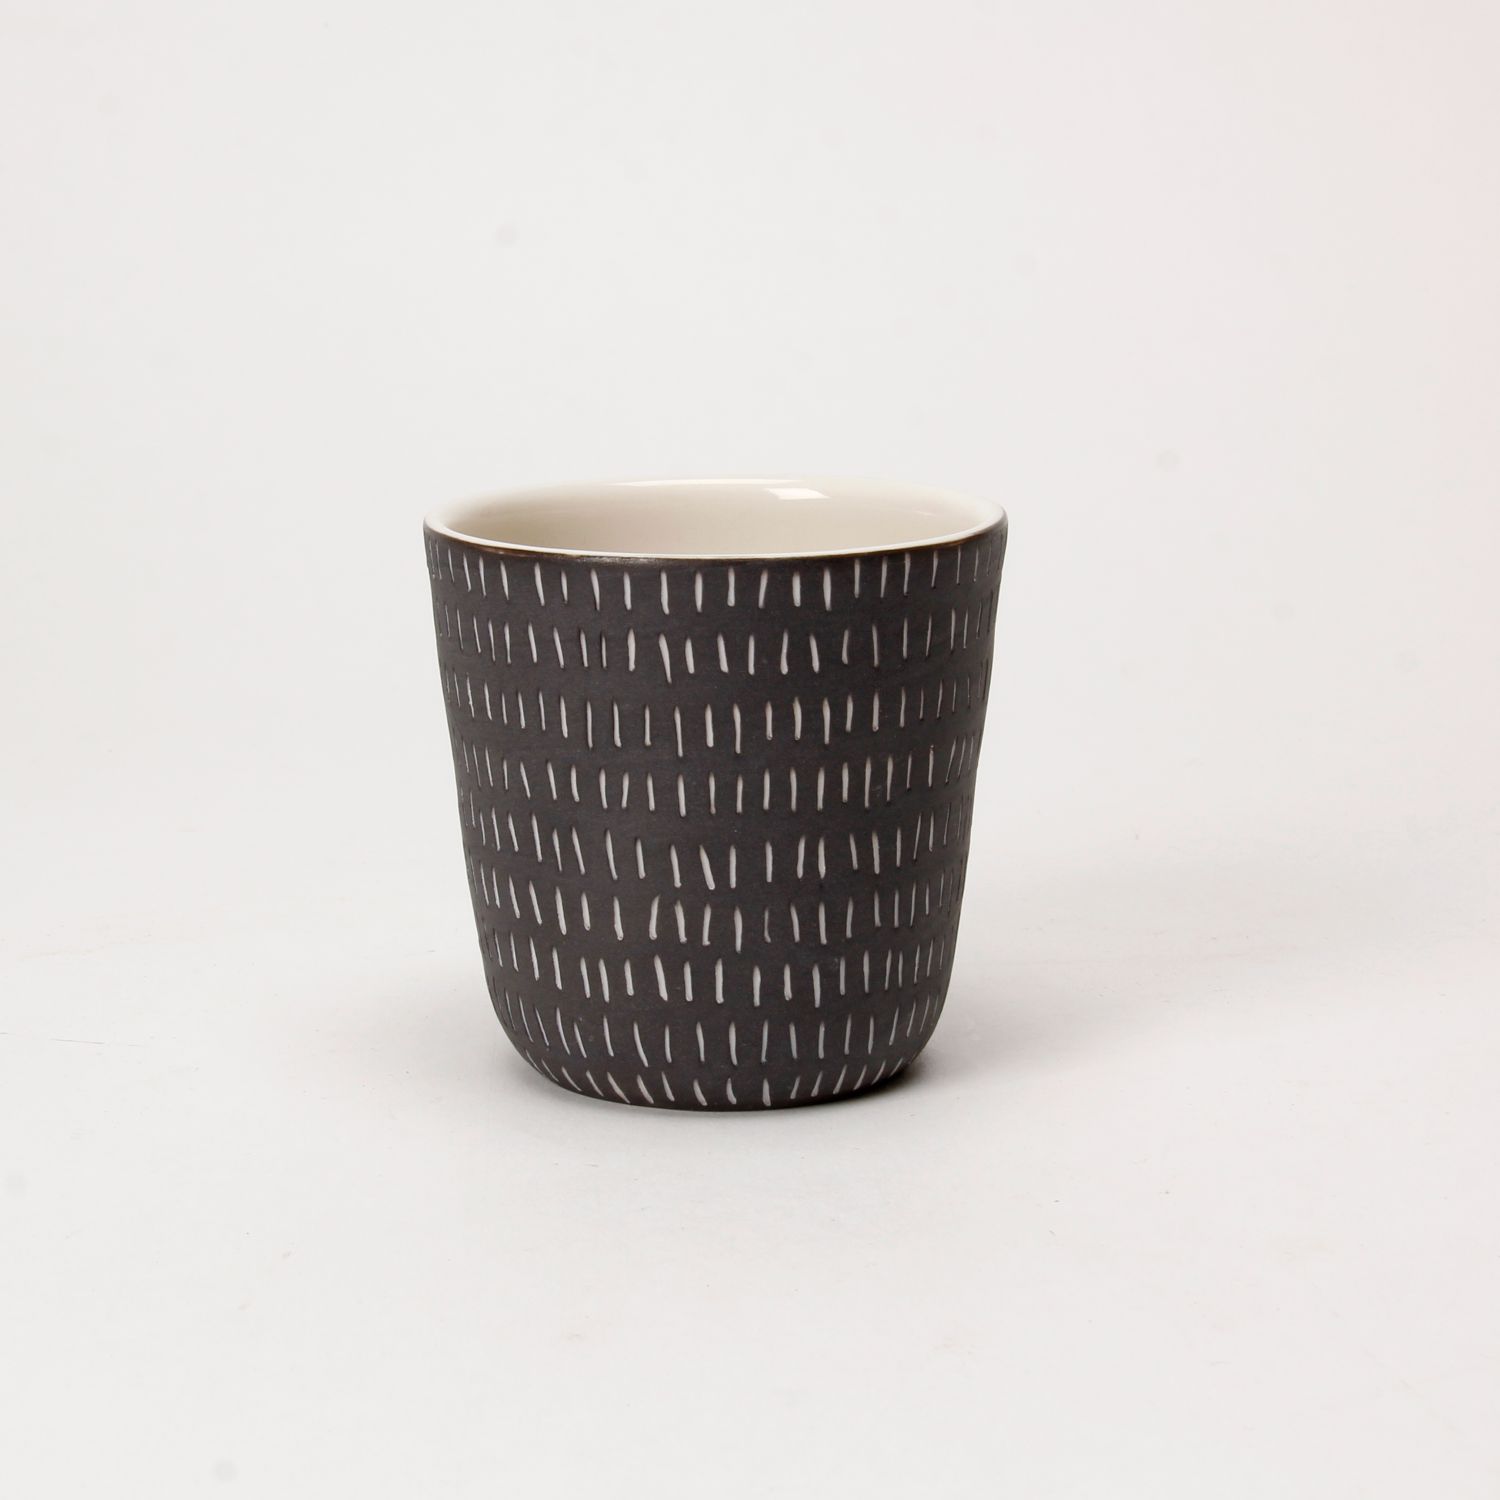 Cuir Ceramics: Black and White Tumbler Product Image 1 of 4